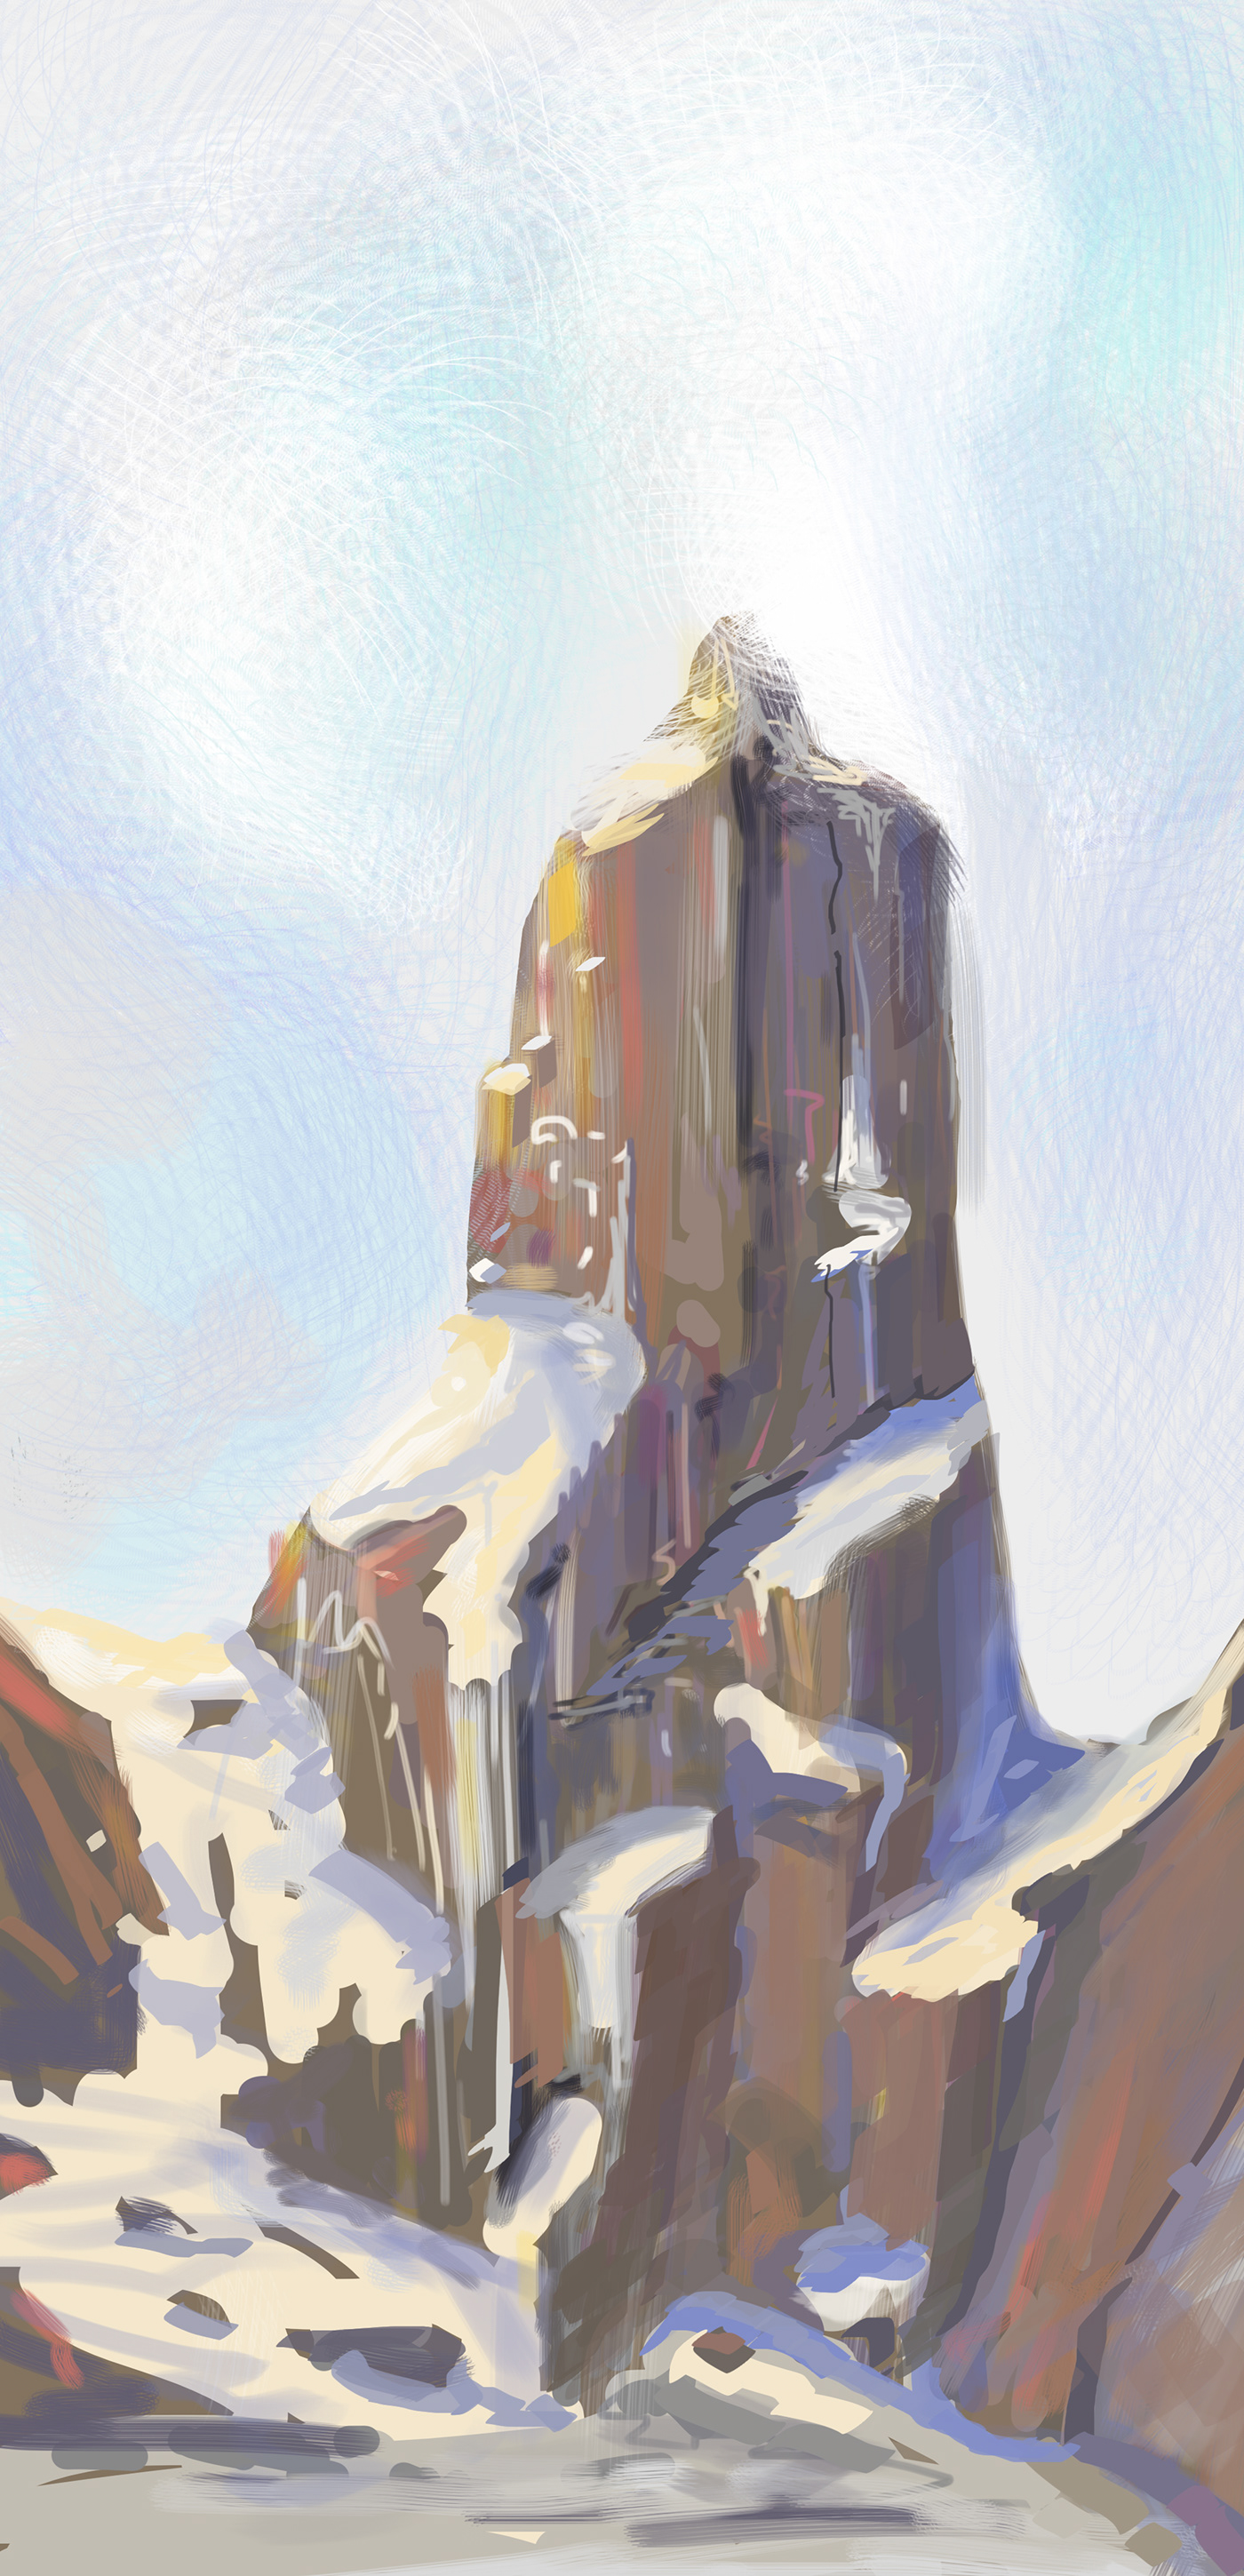 @mountain #mountaintower #peak ilovemountains Digital Painting Of rocks and snow portrait of a mountain blue snow and white peak and tower and shatuber